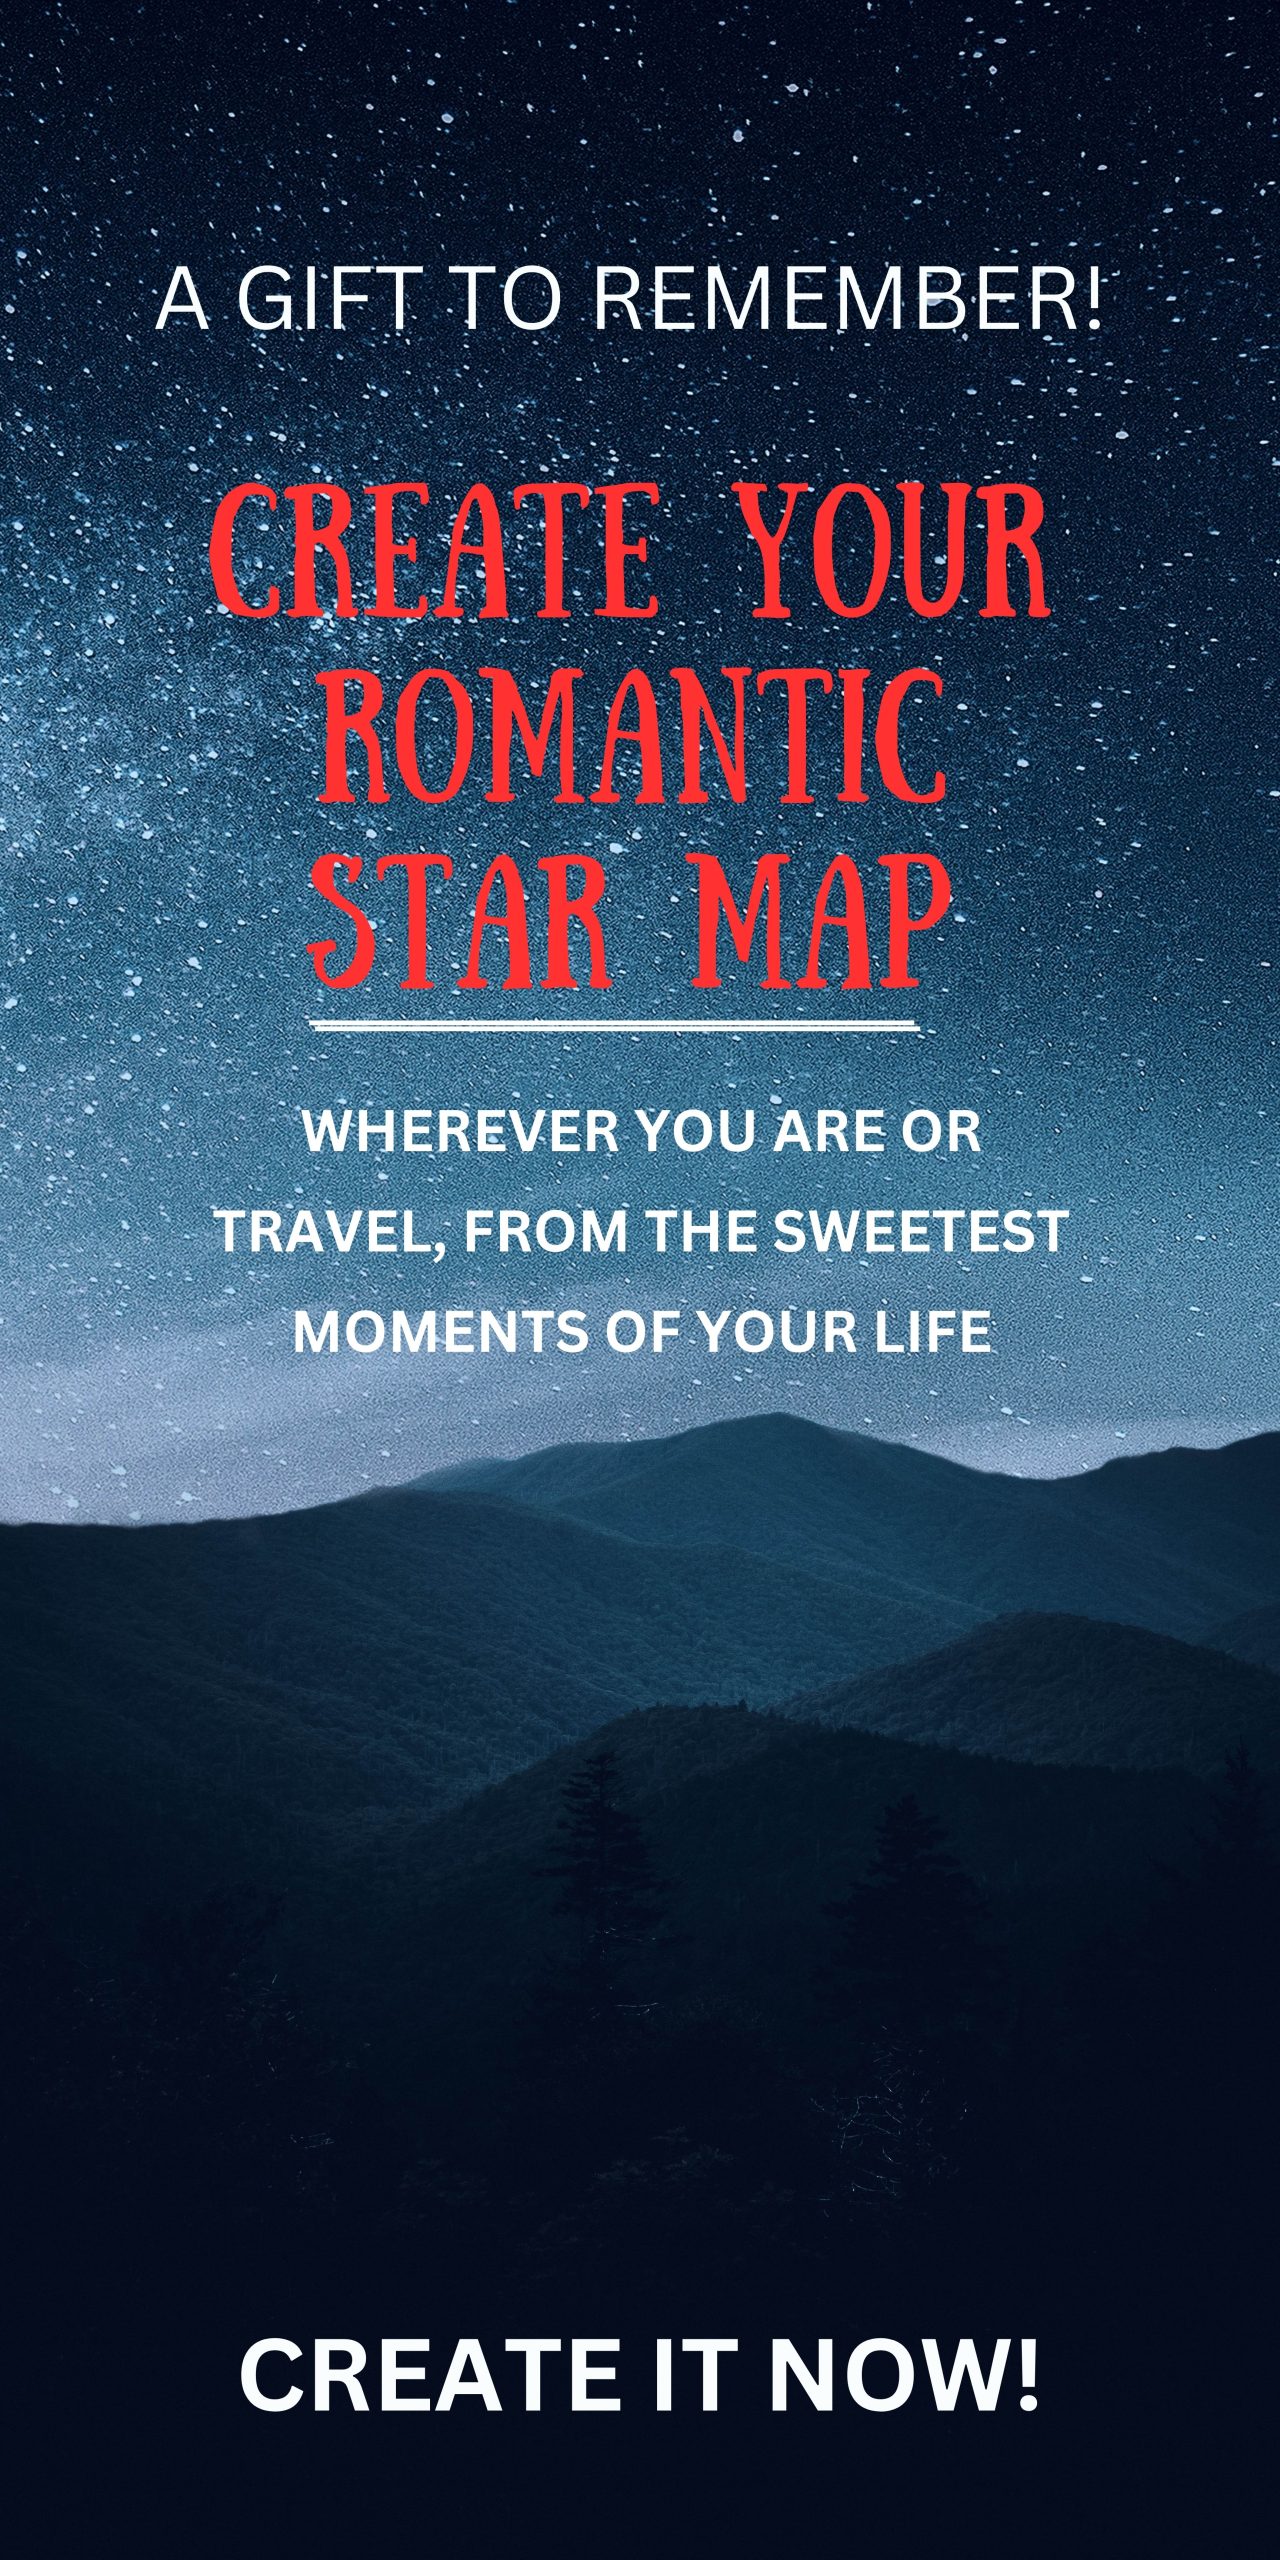 Romantic-Star-Map